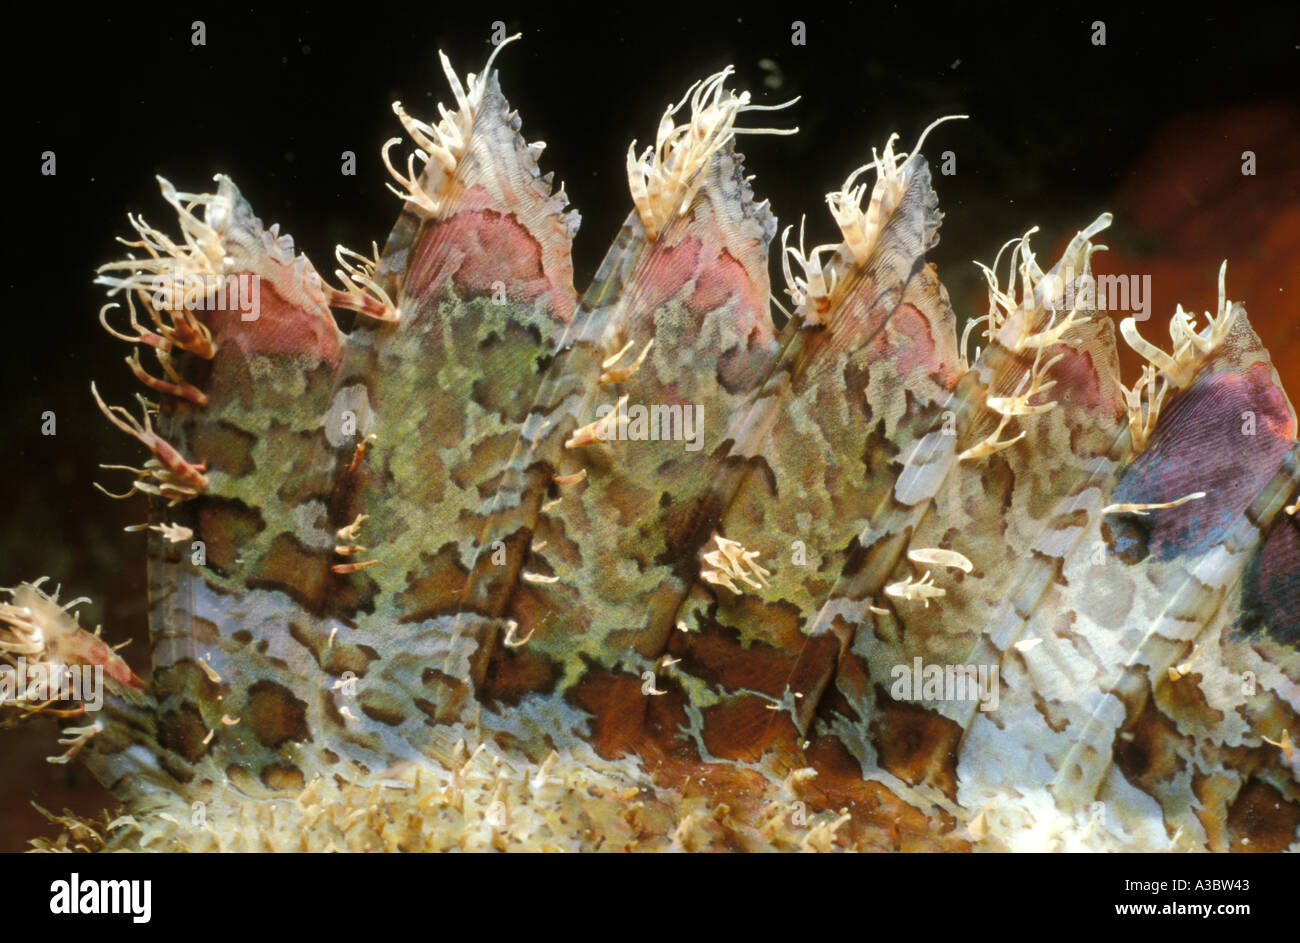 Dorsal fin of scorpionfish Stock Photo